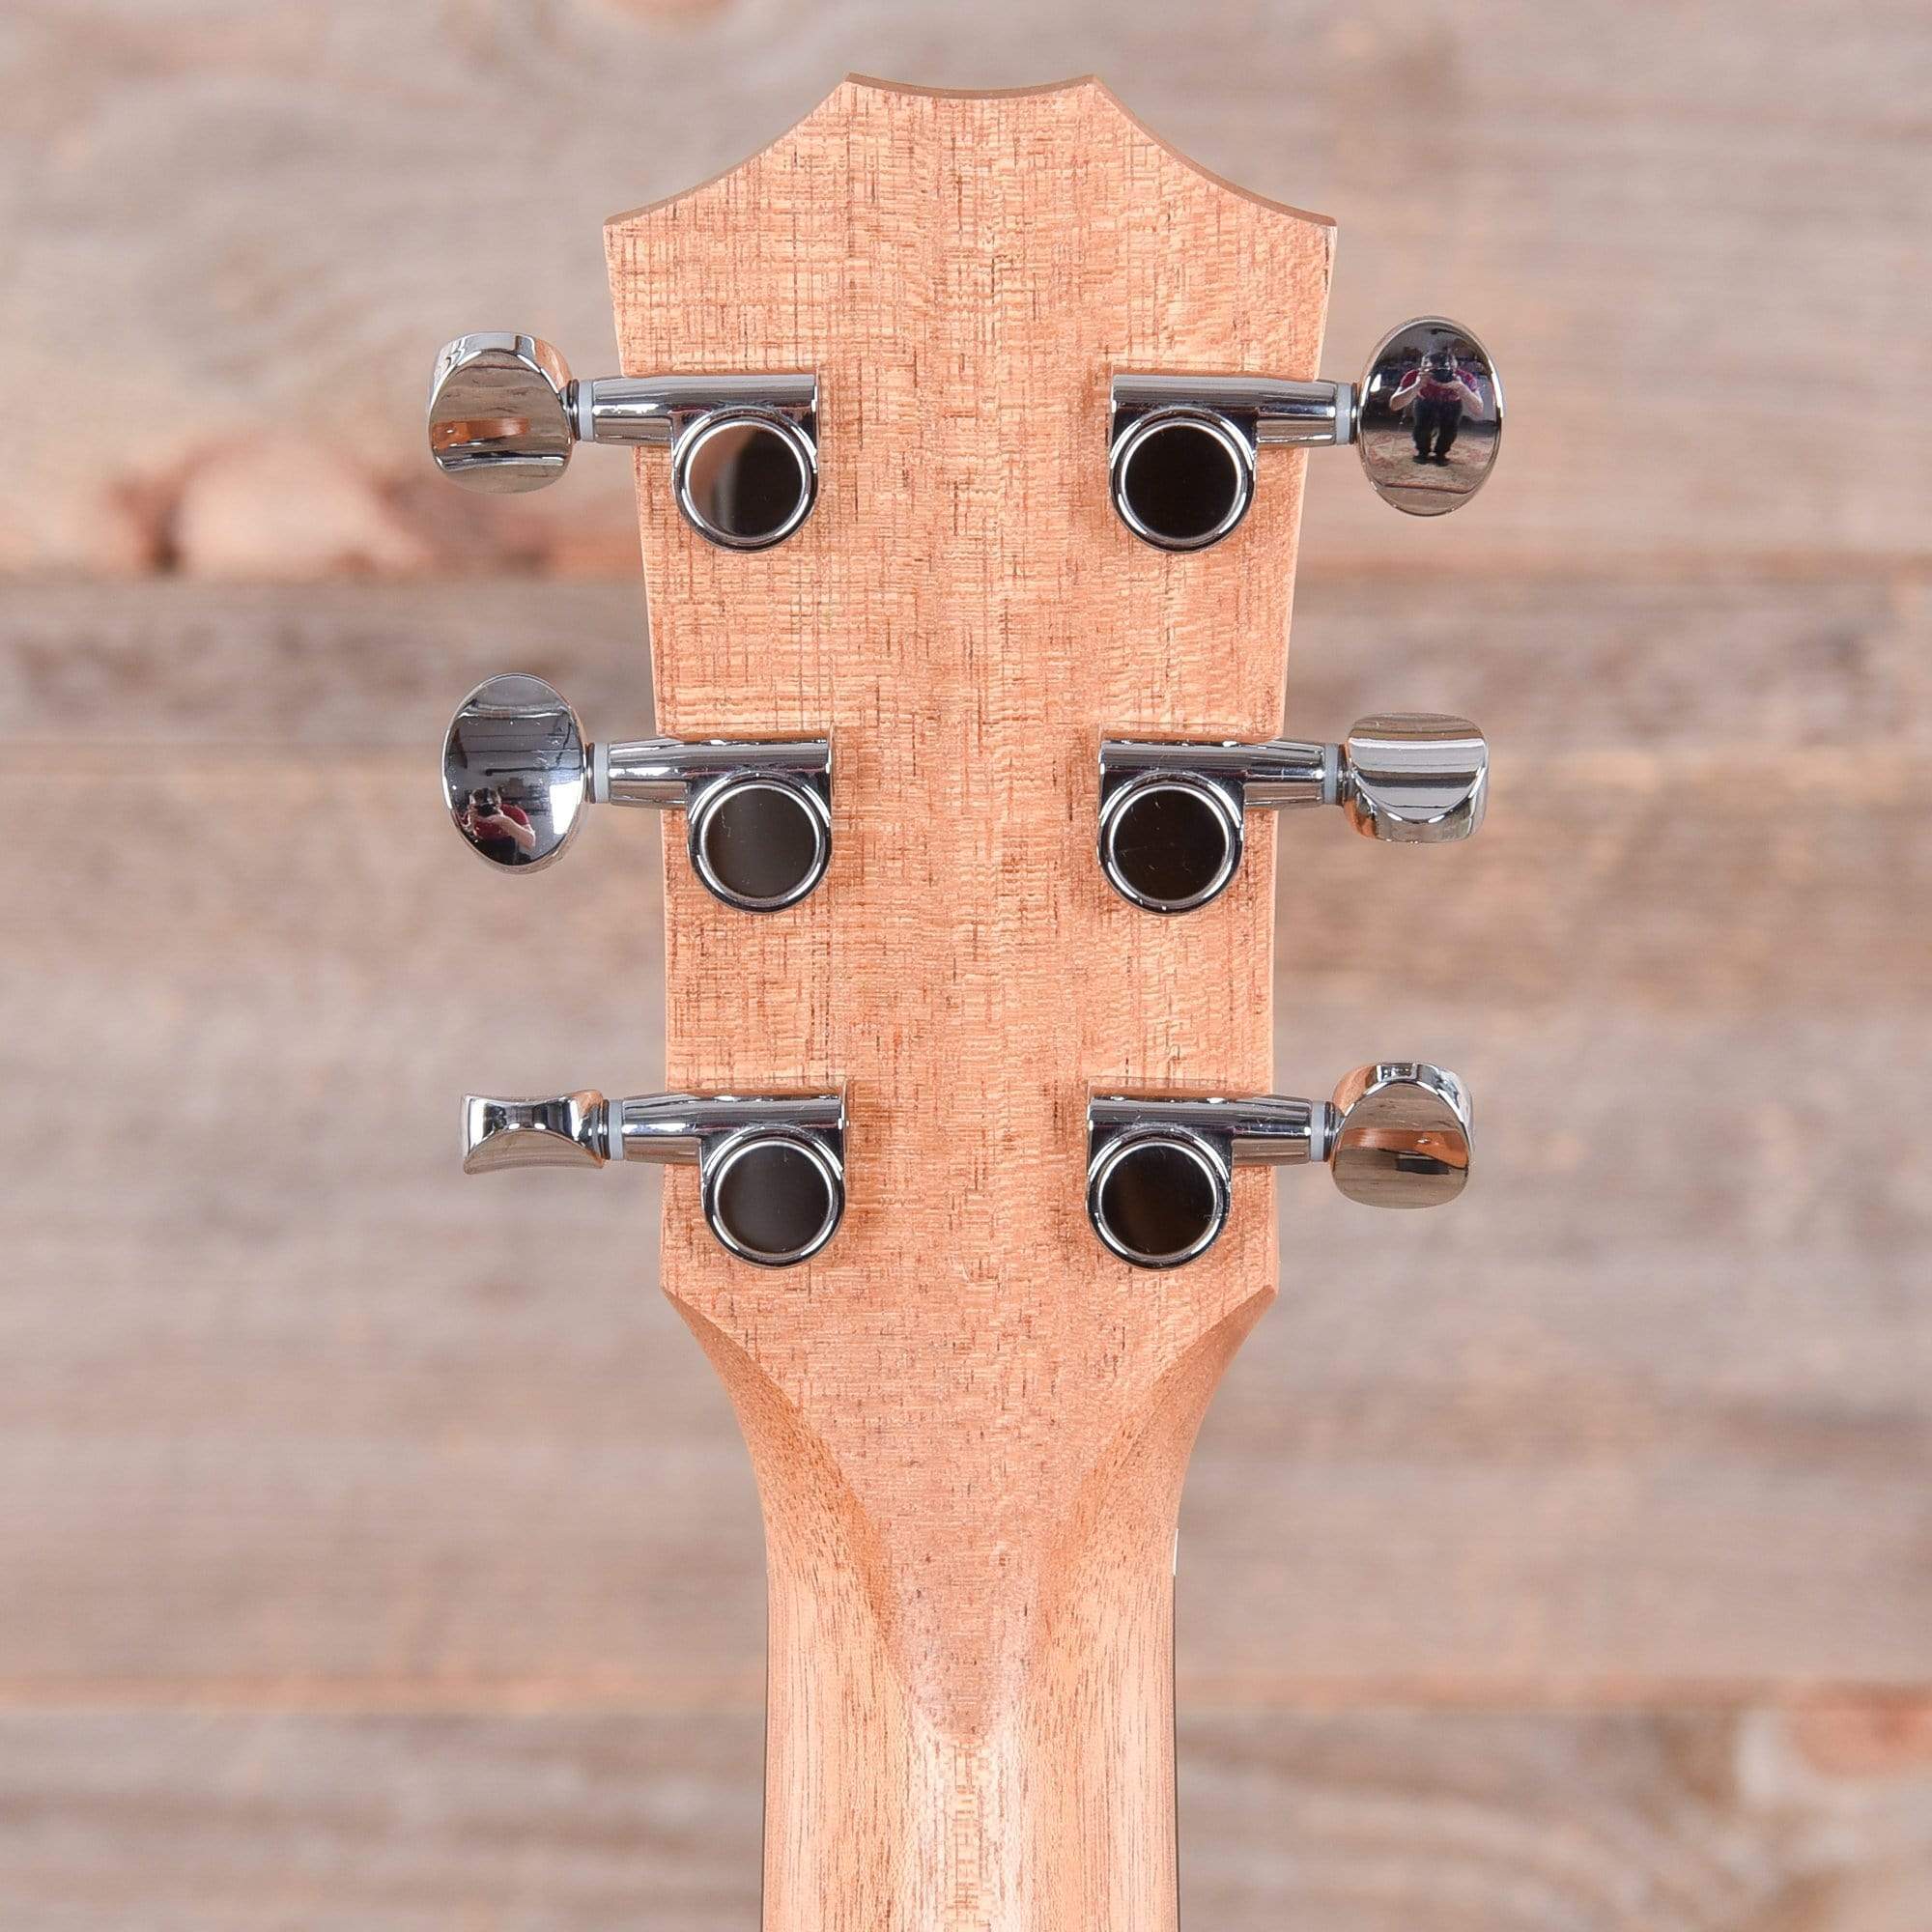 Taylor GS Mini Mahogany Lefty Acoustic Guitars / Mini/Travel